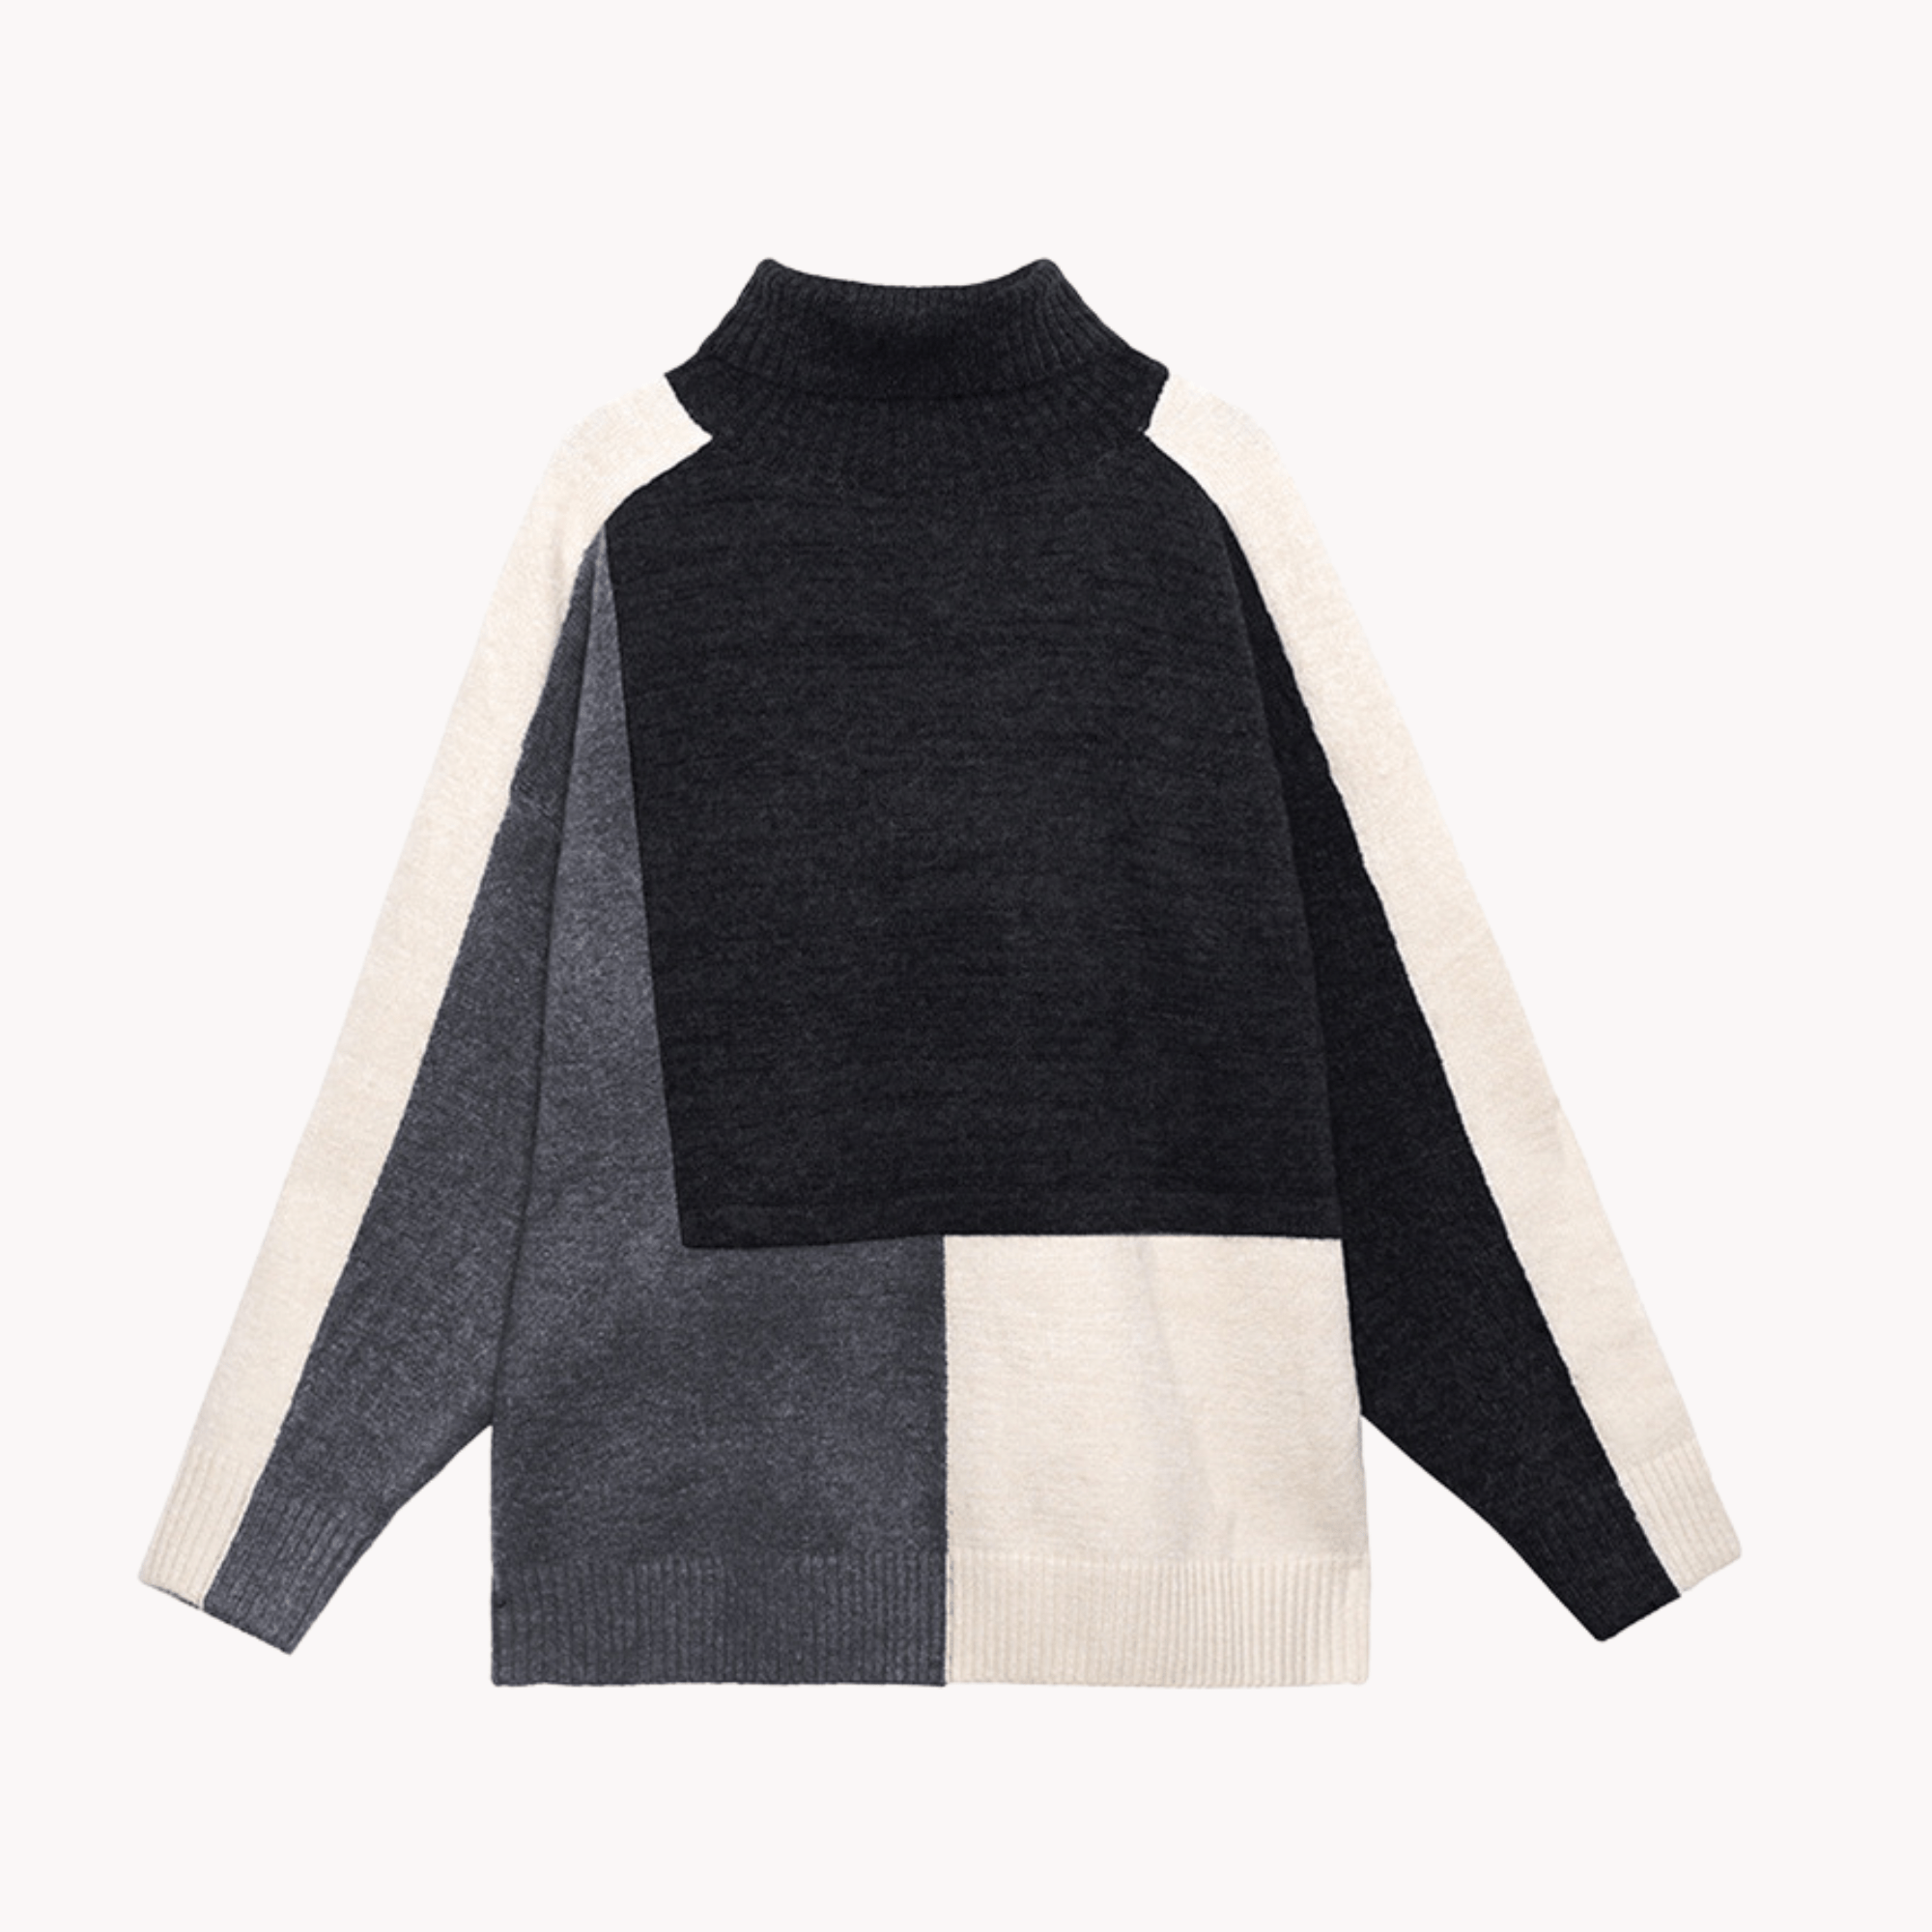 Contrast Colorblock Sweater - Kelly Obi New York